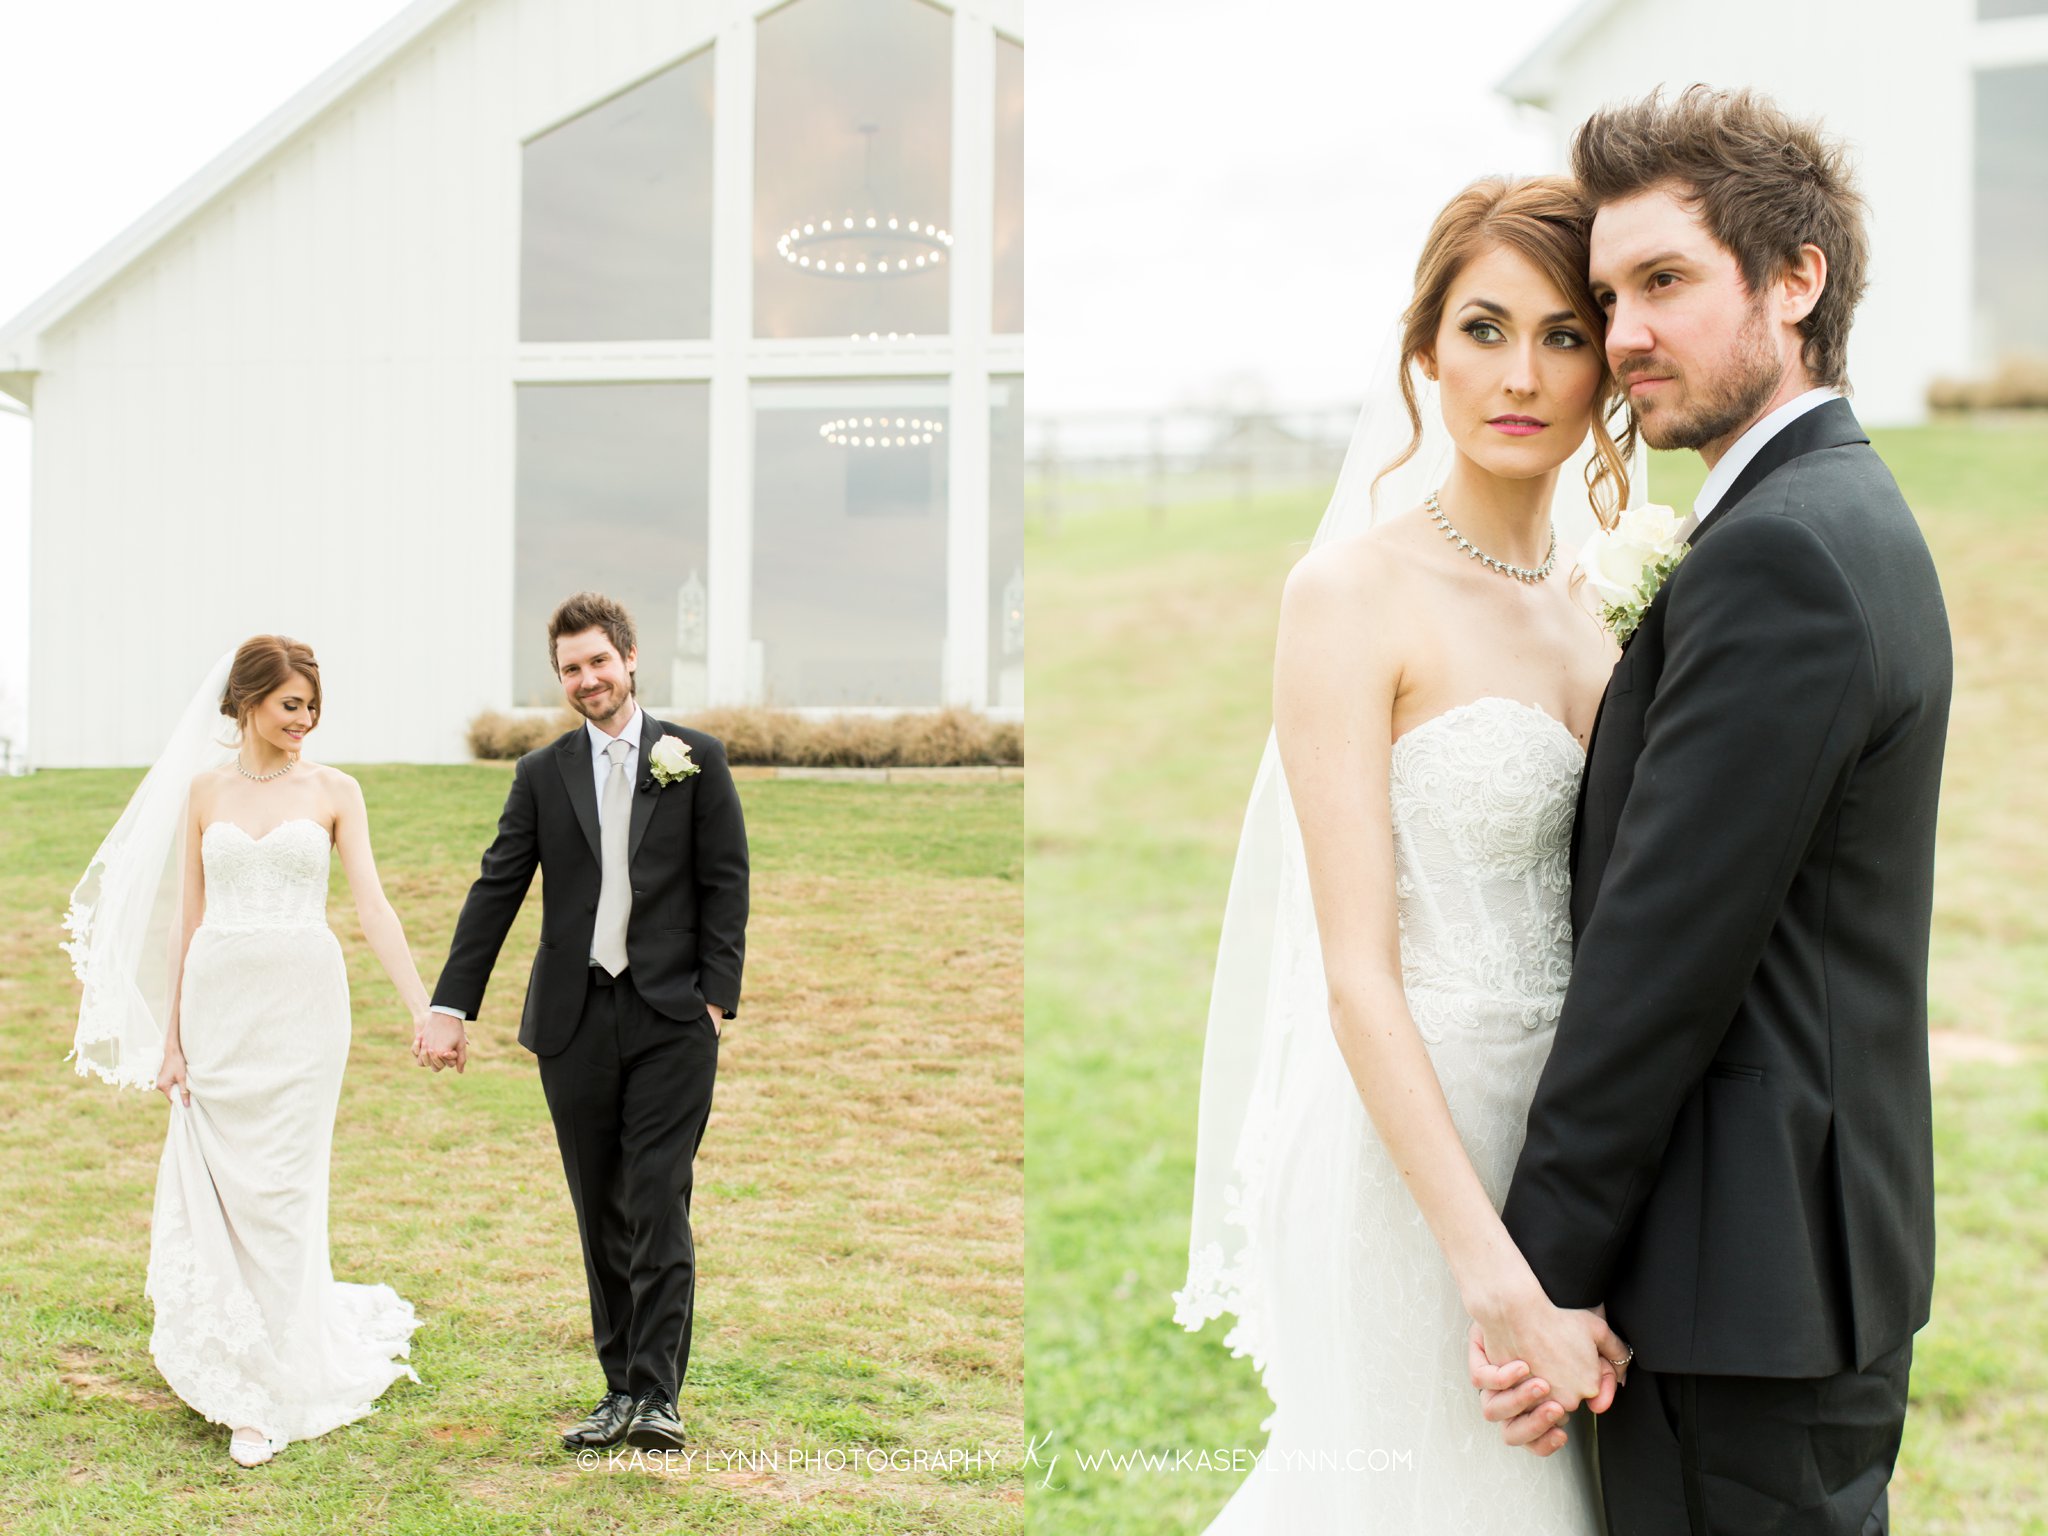 Montgomery Wedding Photographer  / Kasey Lynn Photography